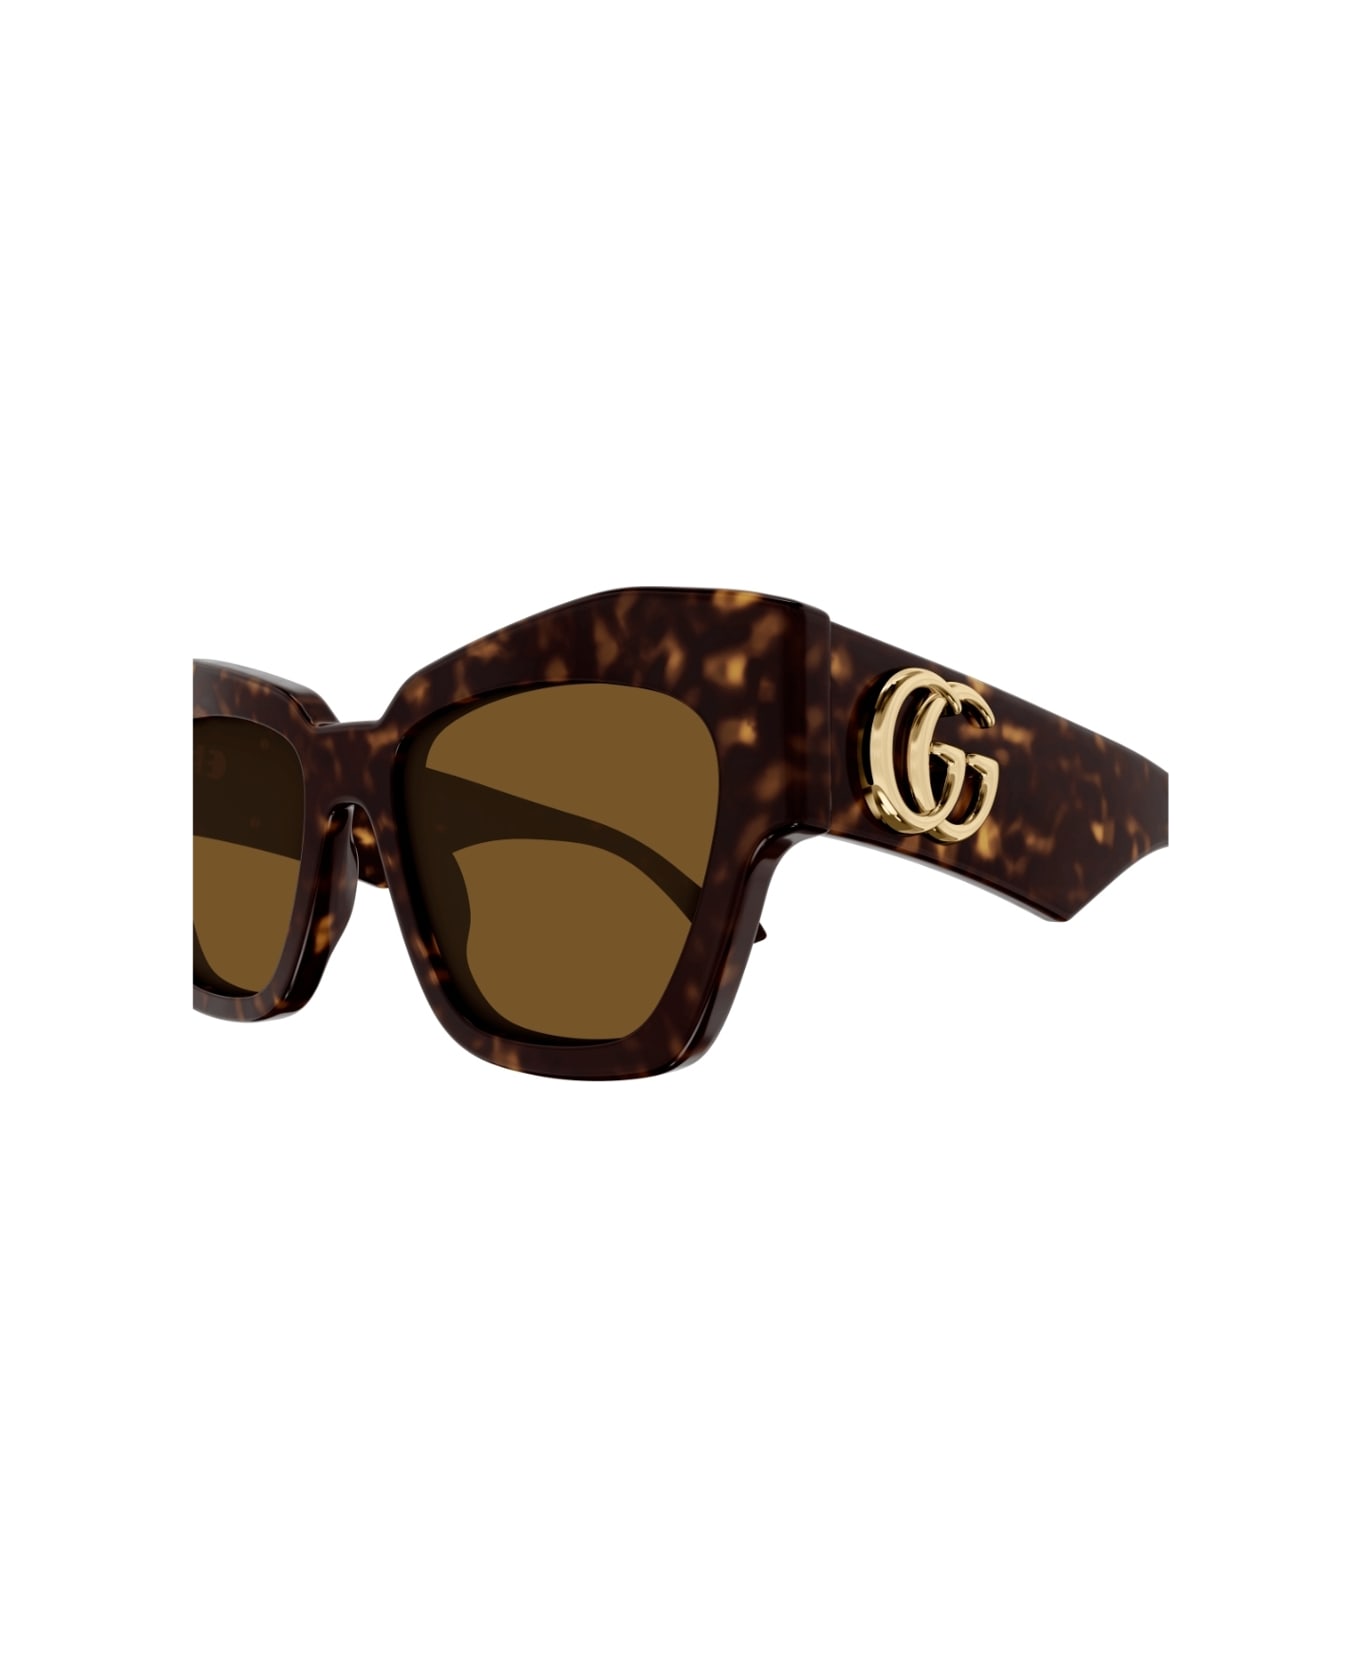 Gucci Eyewear GG1422s 003 Sunglasses